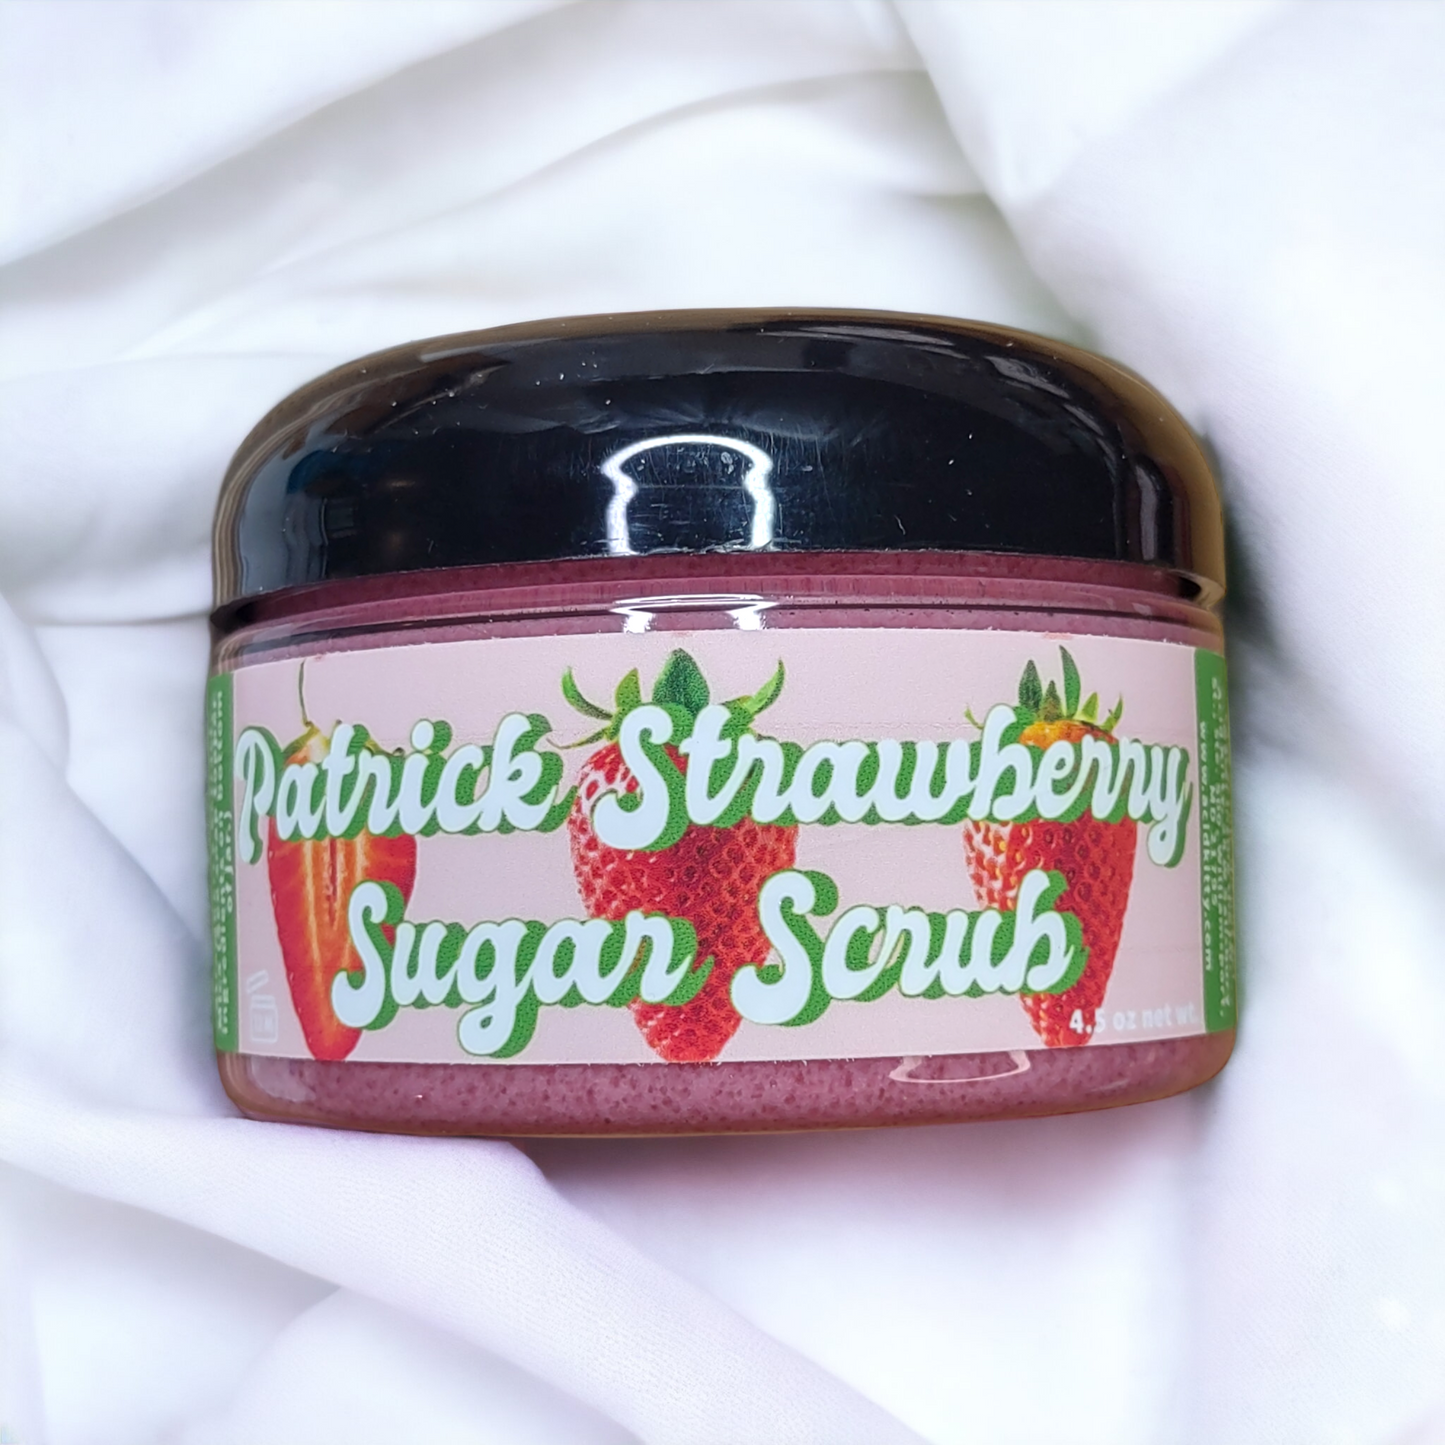 Patrick Strawberry Emulsifying Sugar Scrub (Strawberry Patch Fragrance)